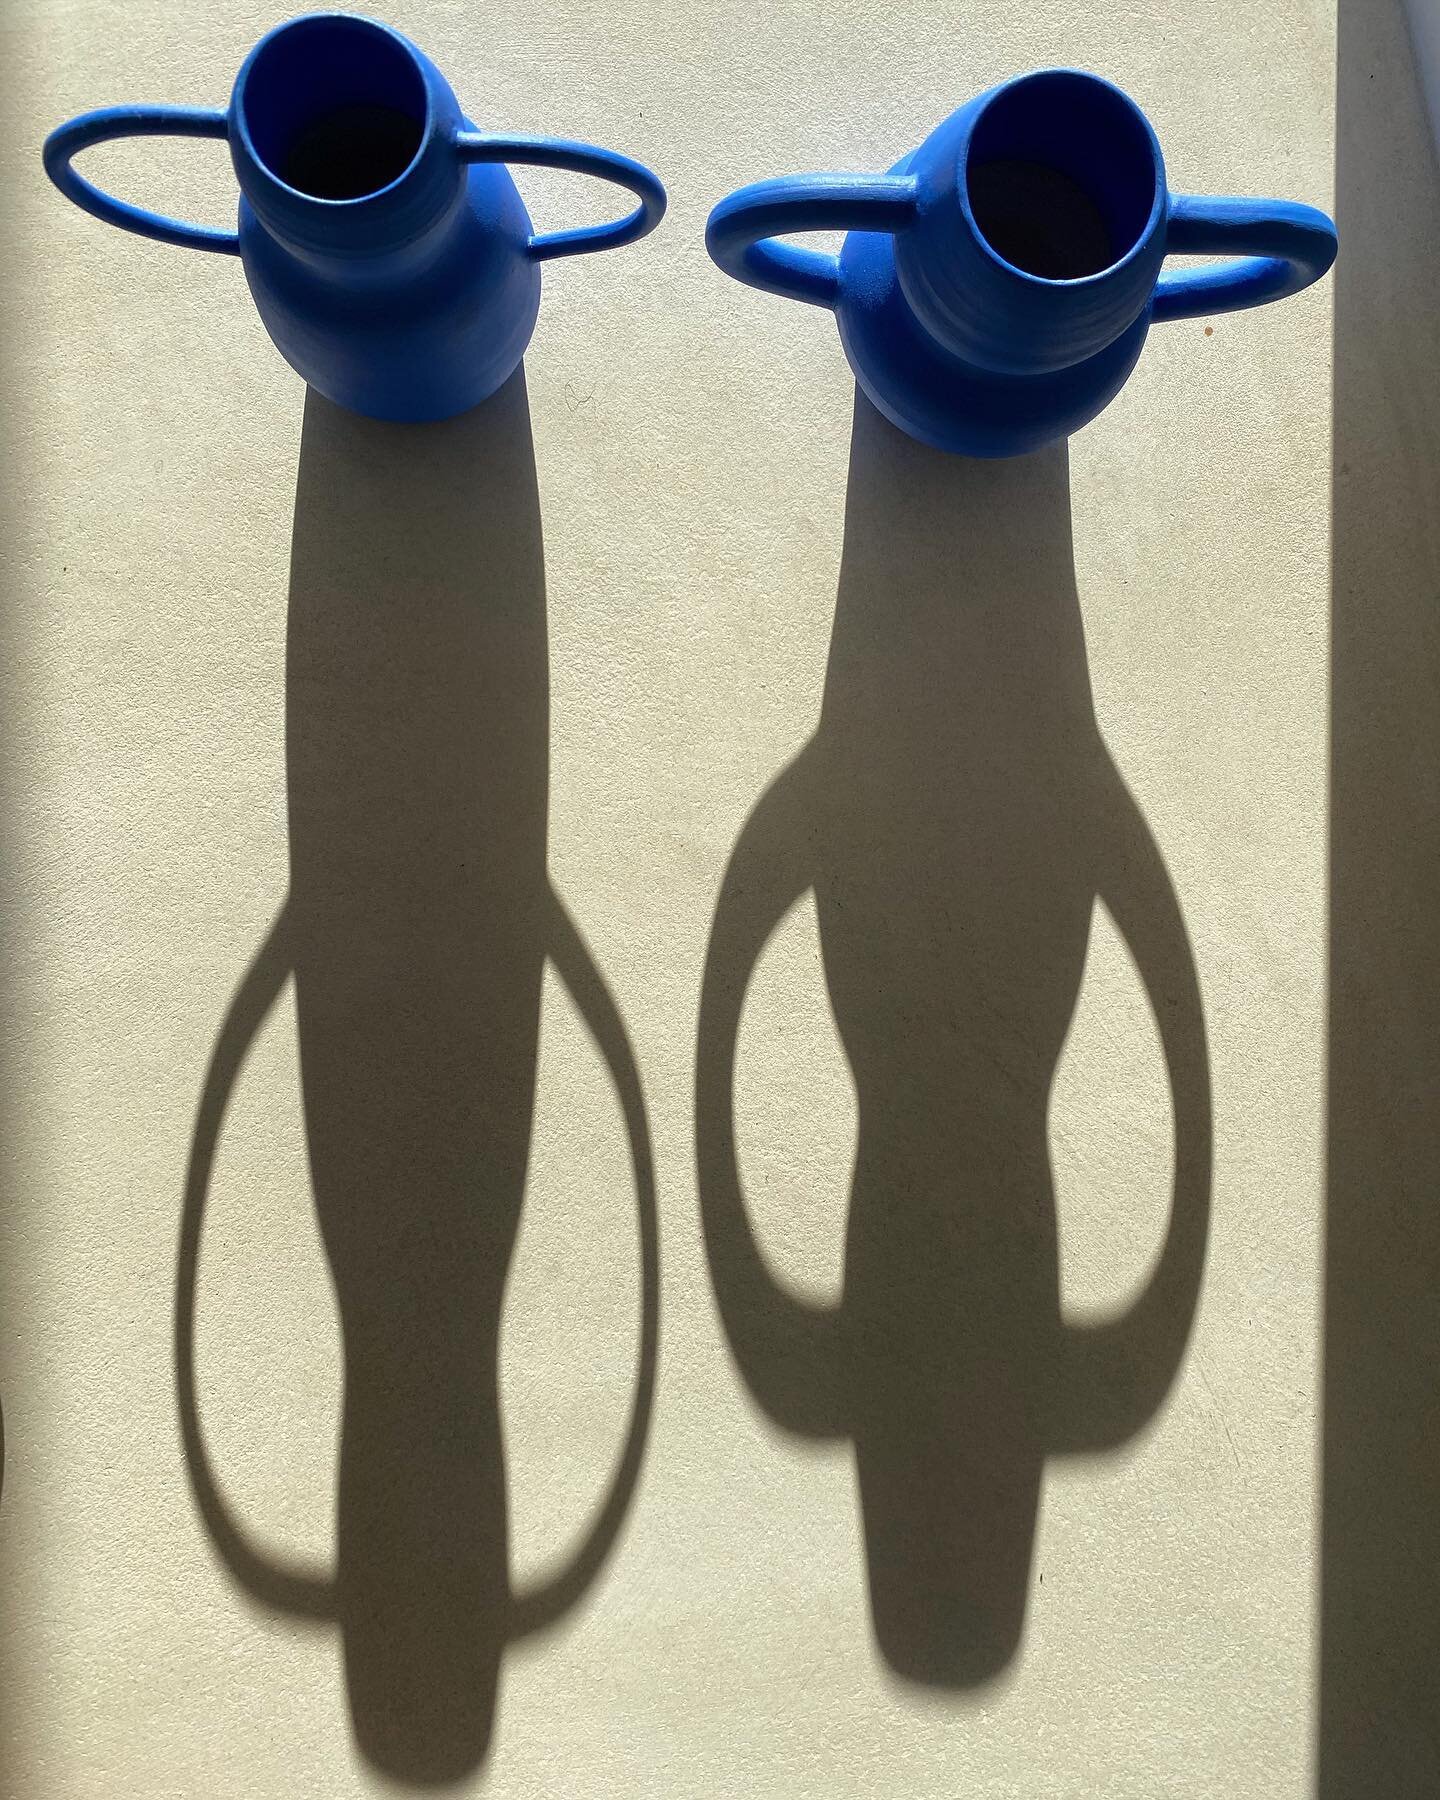 Long December shadows #sassyvases ⠀⠀⠀⠀⠀⠀⠀⠀⠀⠀⠀⠀⠀⠀⠀⠀⠀⠀⠀⠀⠀⠀⠀⠀⠀⠀⠀⠀⠀⠀⠀⠀⠀⠀⠀ ⠀⠀⠀⠀⠀⠀⠀⠀⠀⠀⠀⠀⠀⠀⠀⠀⠀⠀⠀⠀⠀ ⠀⠀⠀⠀⠀⠀⠀⠀⠀⠀⠀⠀⠀⠀⠀⠀⠀⠀⠀⠀⠀ ⠀⠀⠀⠀⠀⠀⠀⠀⠀⠀⠀⠀⠀⠀⠀⠀⠀⠀⠀⠀⠀ ⠀⠀⠀⠀⠀⠀⠀⠀⠀⠀⠀⠀⠀⠀⠀⠀⠀⠀⠀⠀⠀ ⠀⠀⠀⠀⠀⠀⠀⠀⠀⠀⠀⠀⠀⠀⠀⠀⠀⠀⠀⠀⠀⠀⠀⠀⠀⠀⠀⠀⠀⠀⠀⠀⠀⠀⠀ #ceramicsculpture #ceramics #handmadevase #contemporaryc